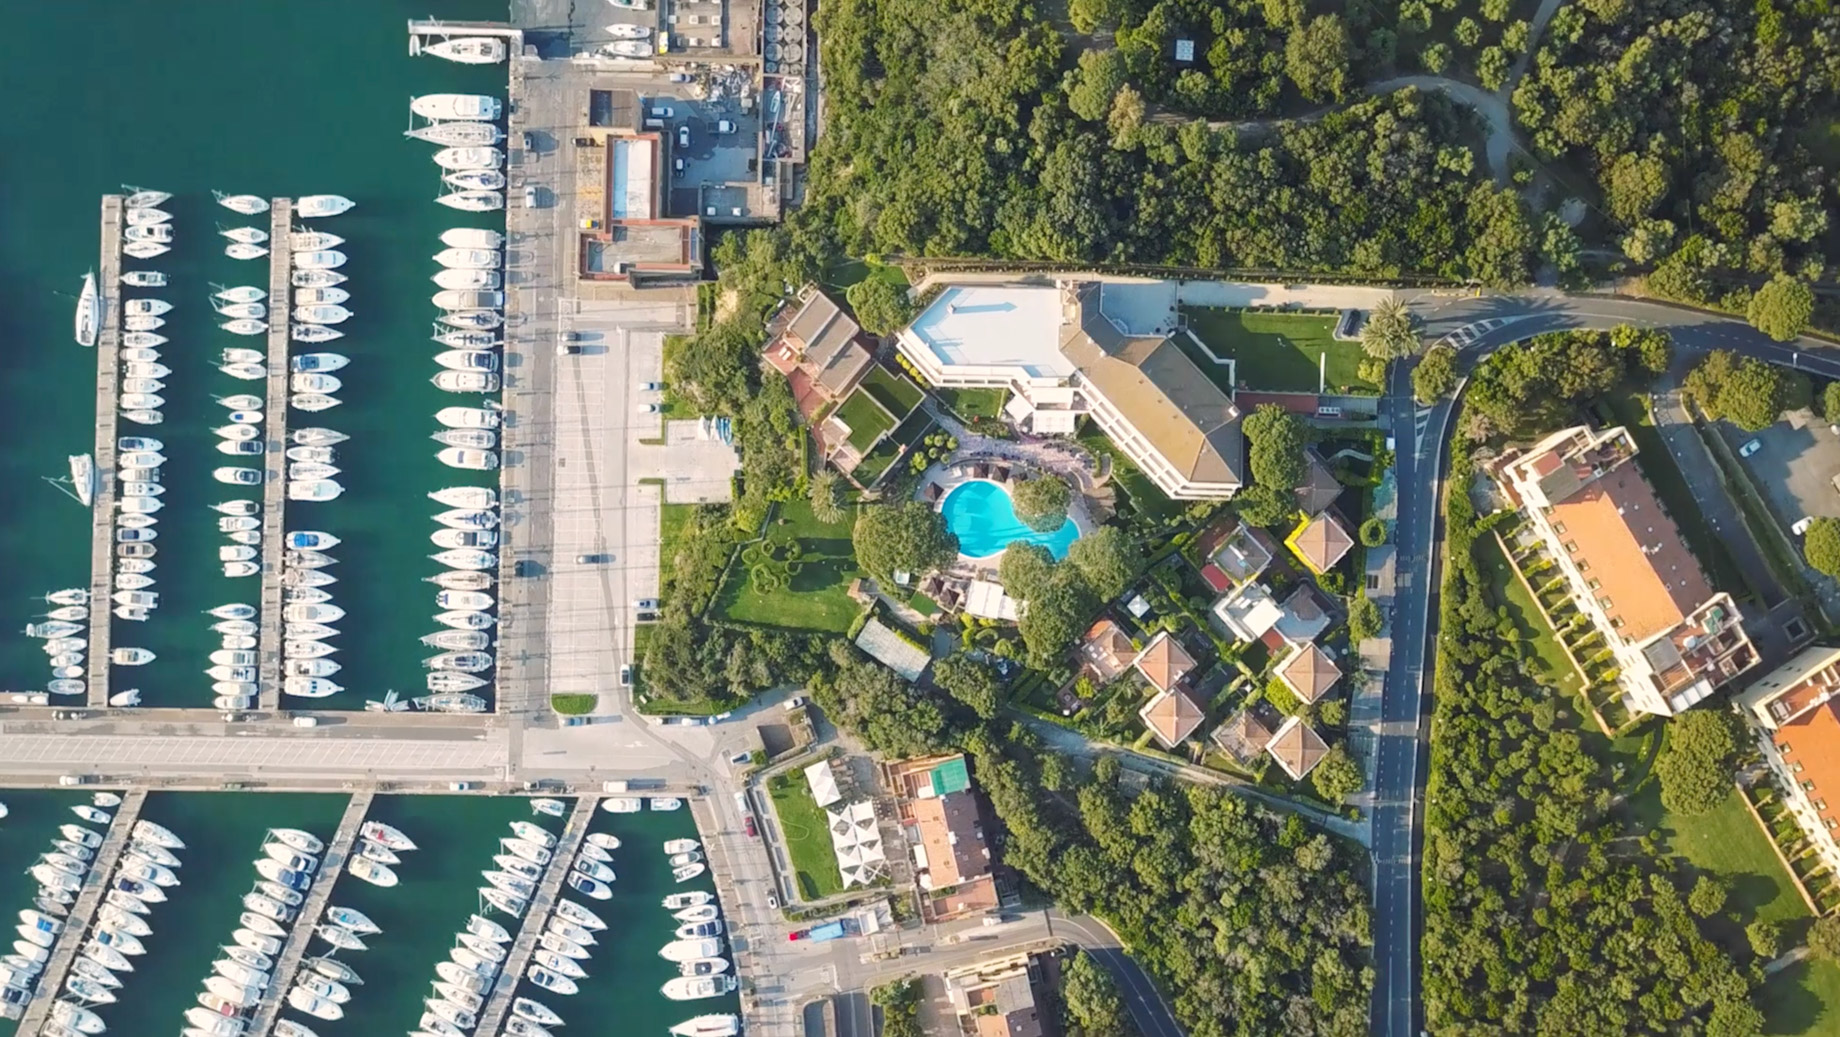 Baglioni Resort Cala del Porto Tuscany – Punta Ala, Italy – Overhead Aerial View